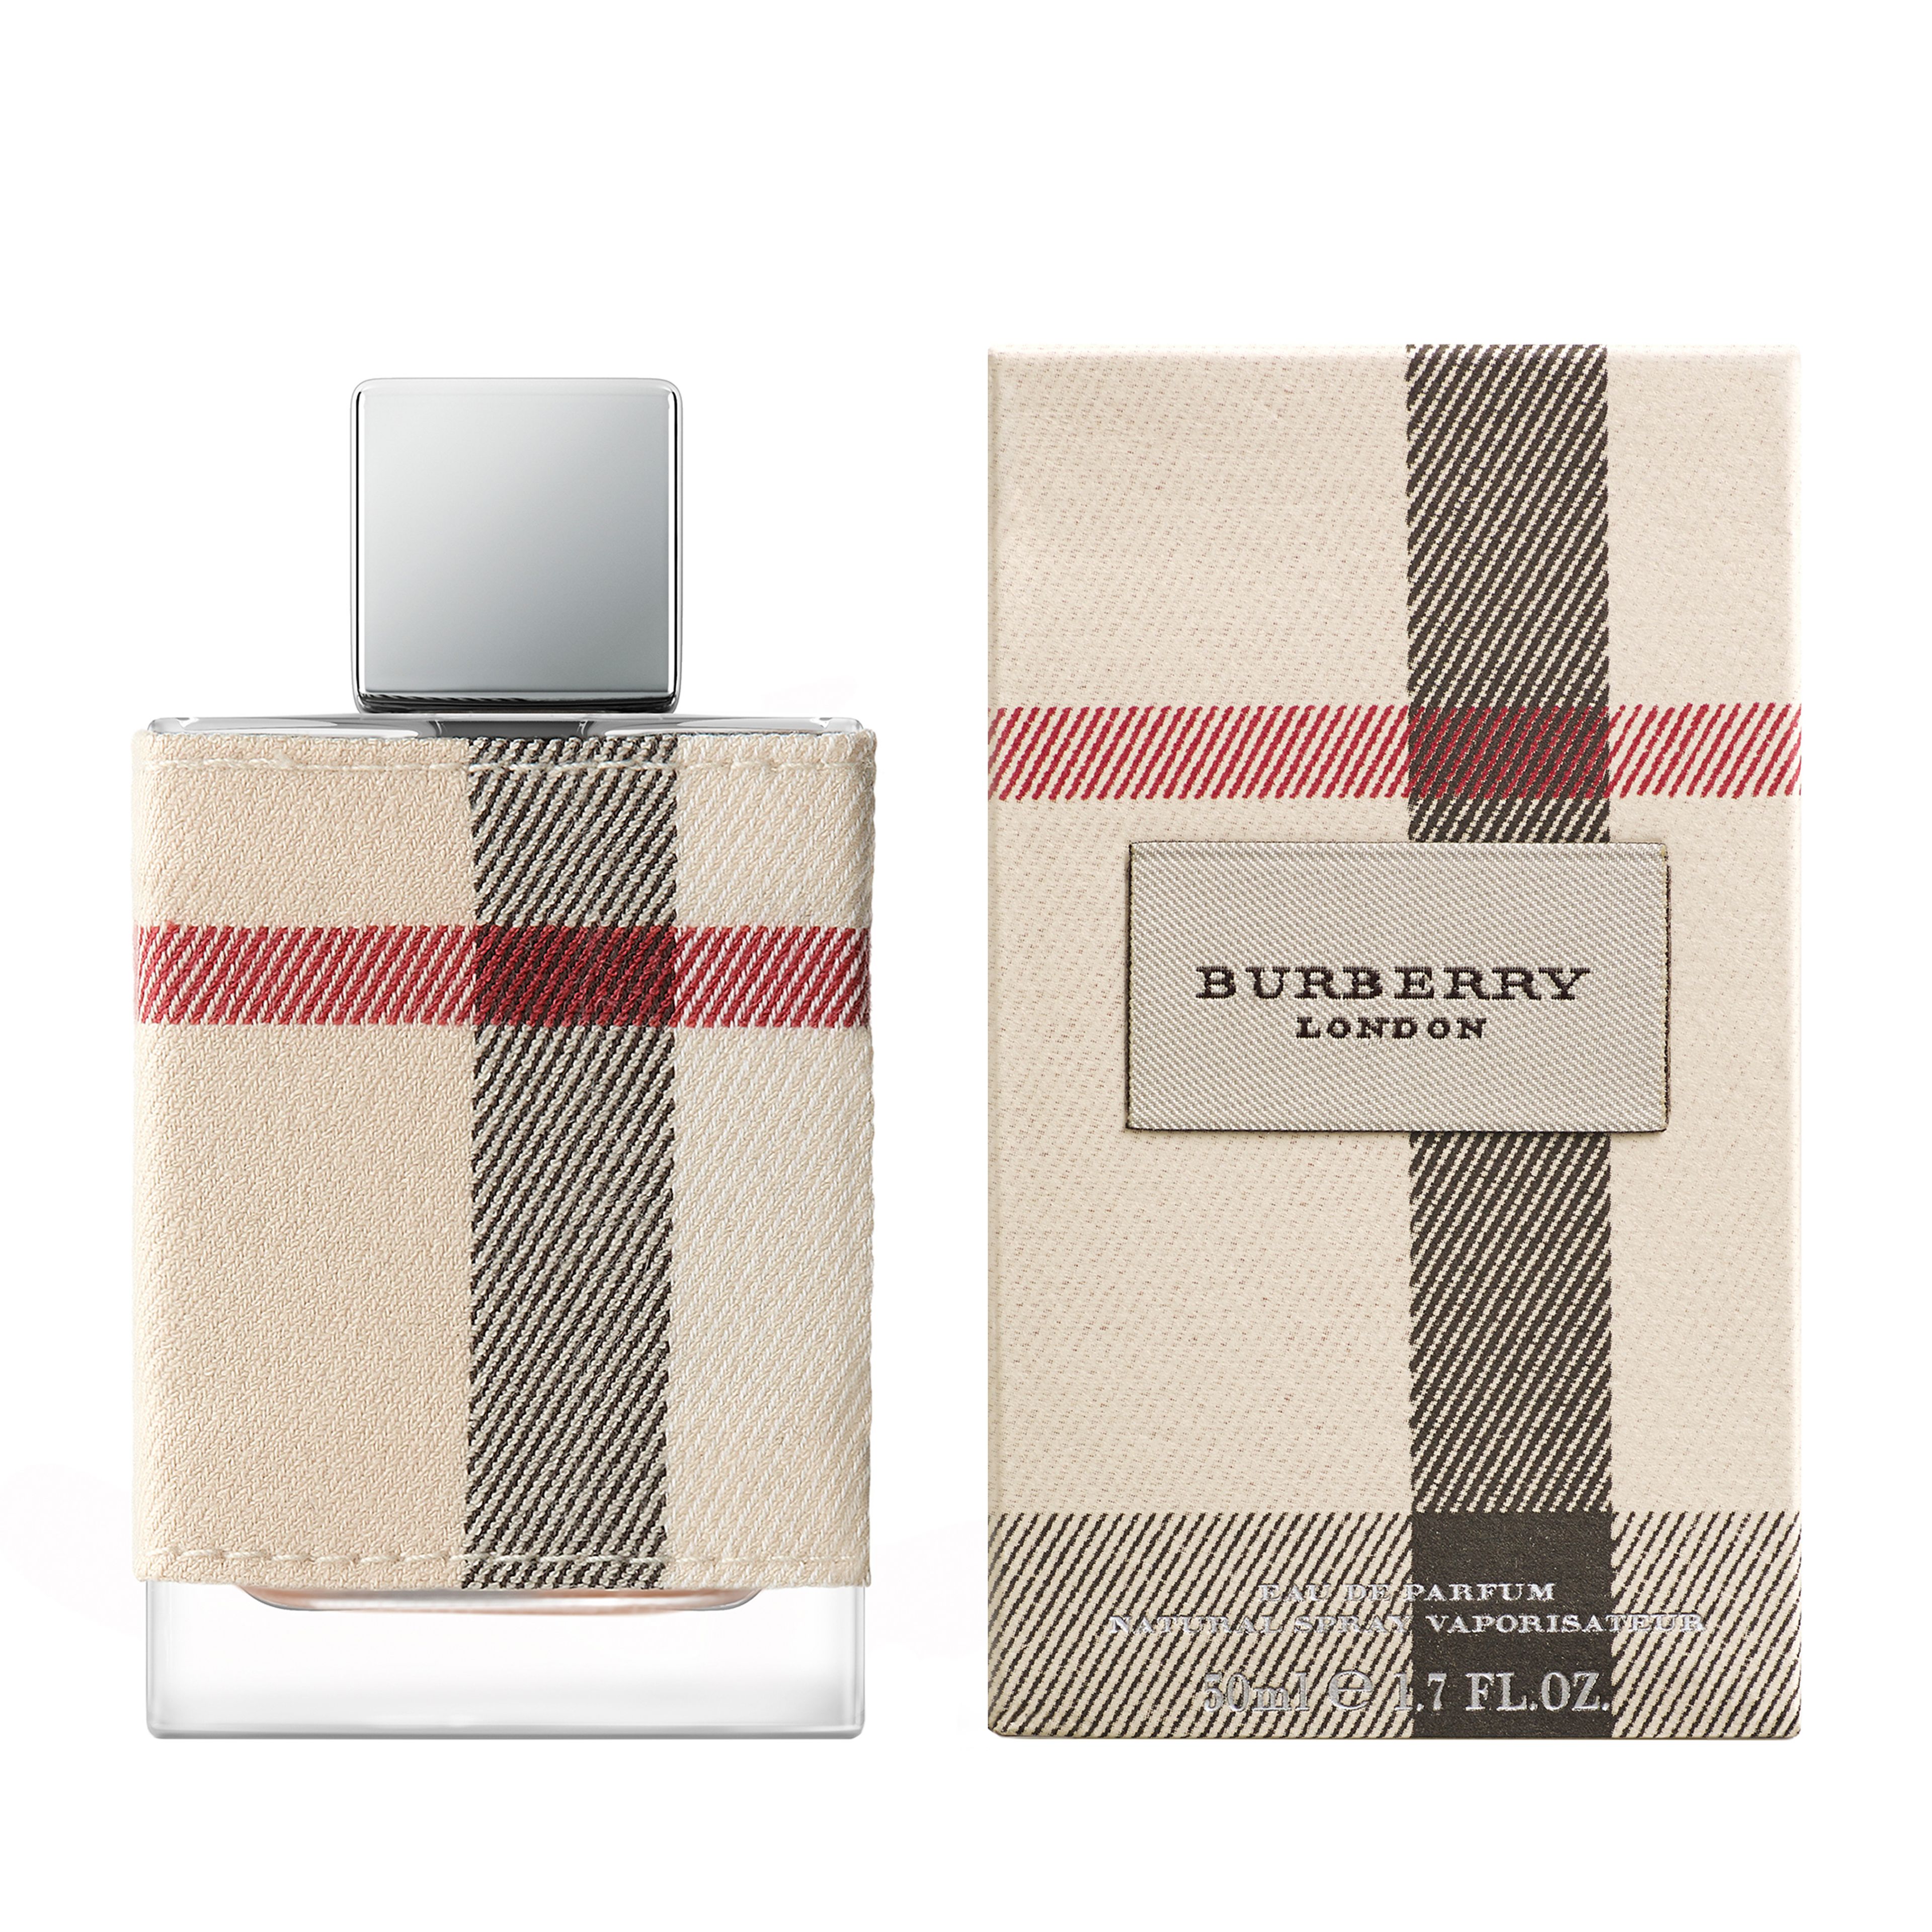 Burberry Burberry London Eau De Parfum 2